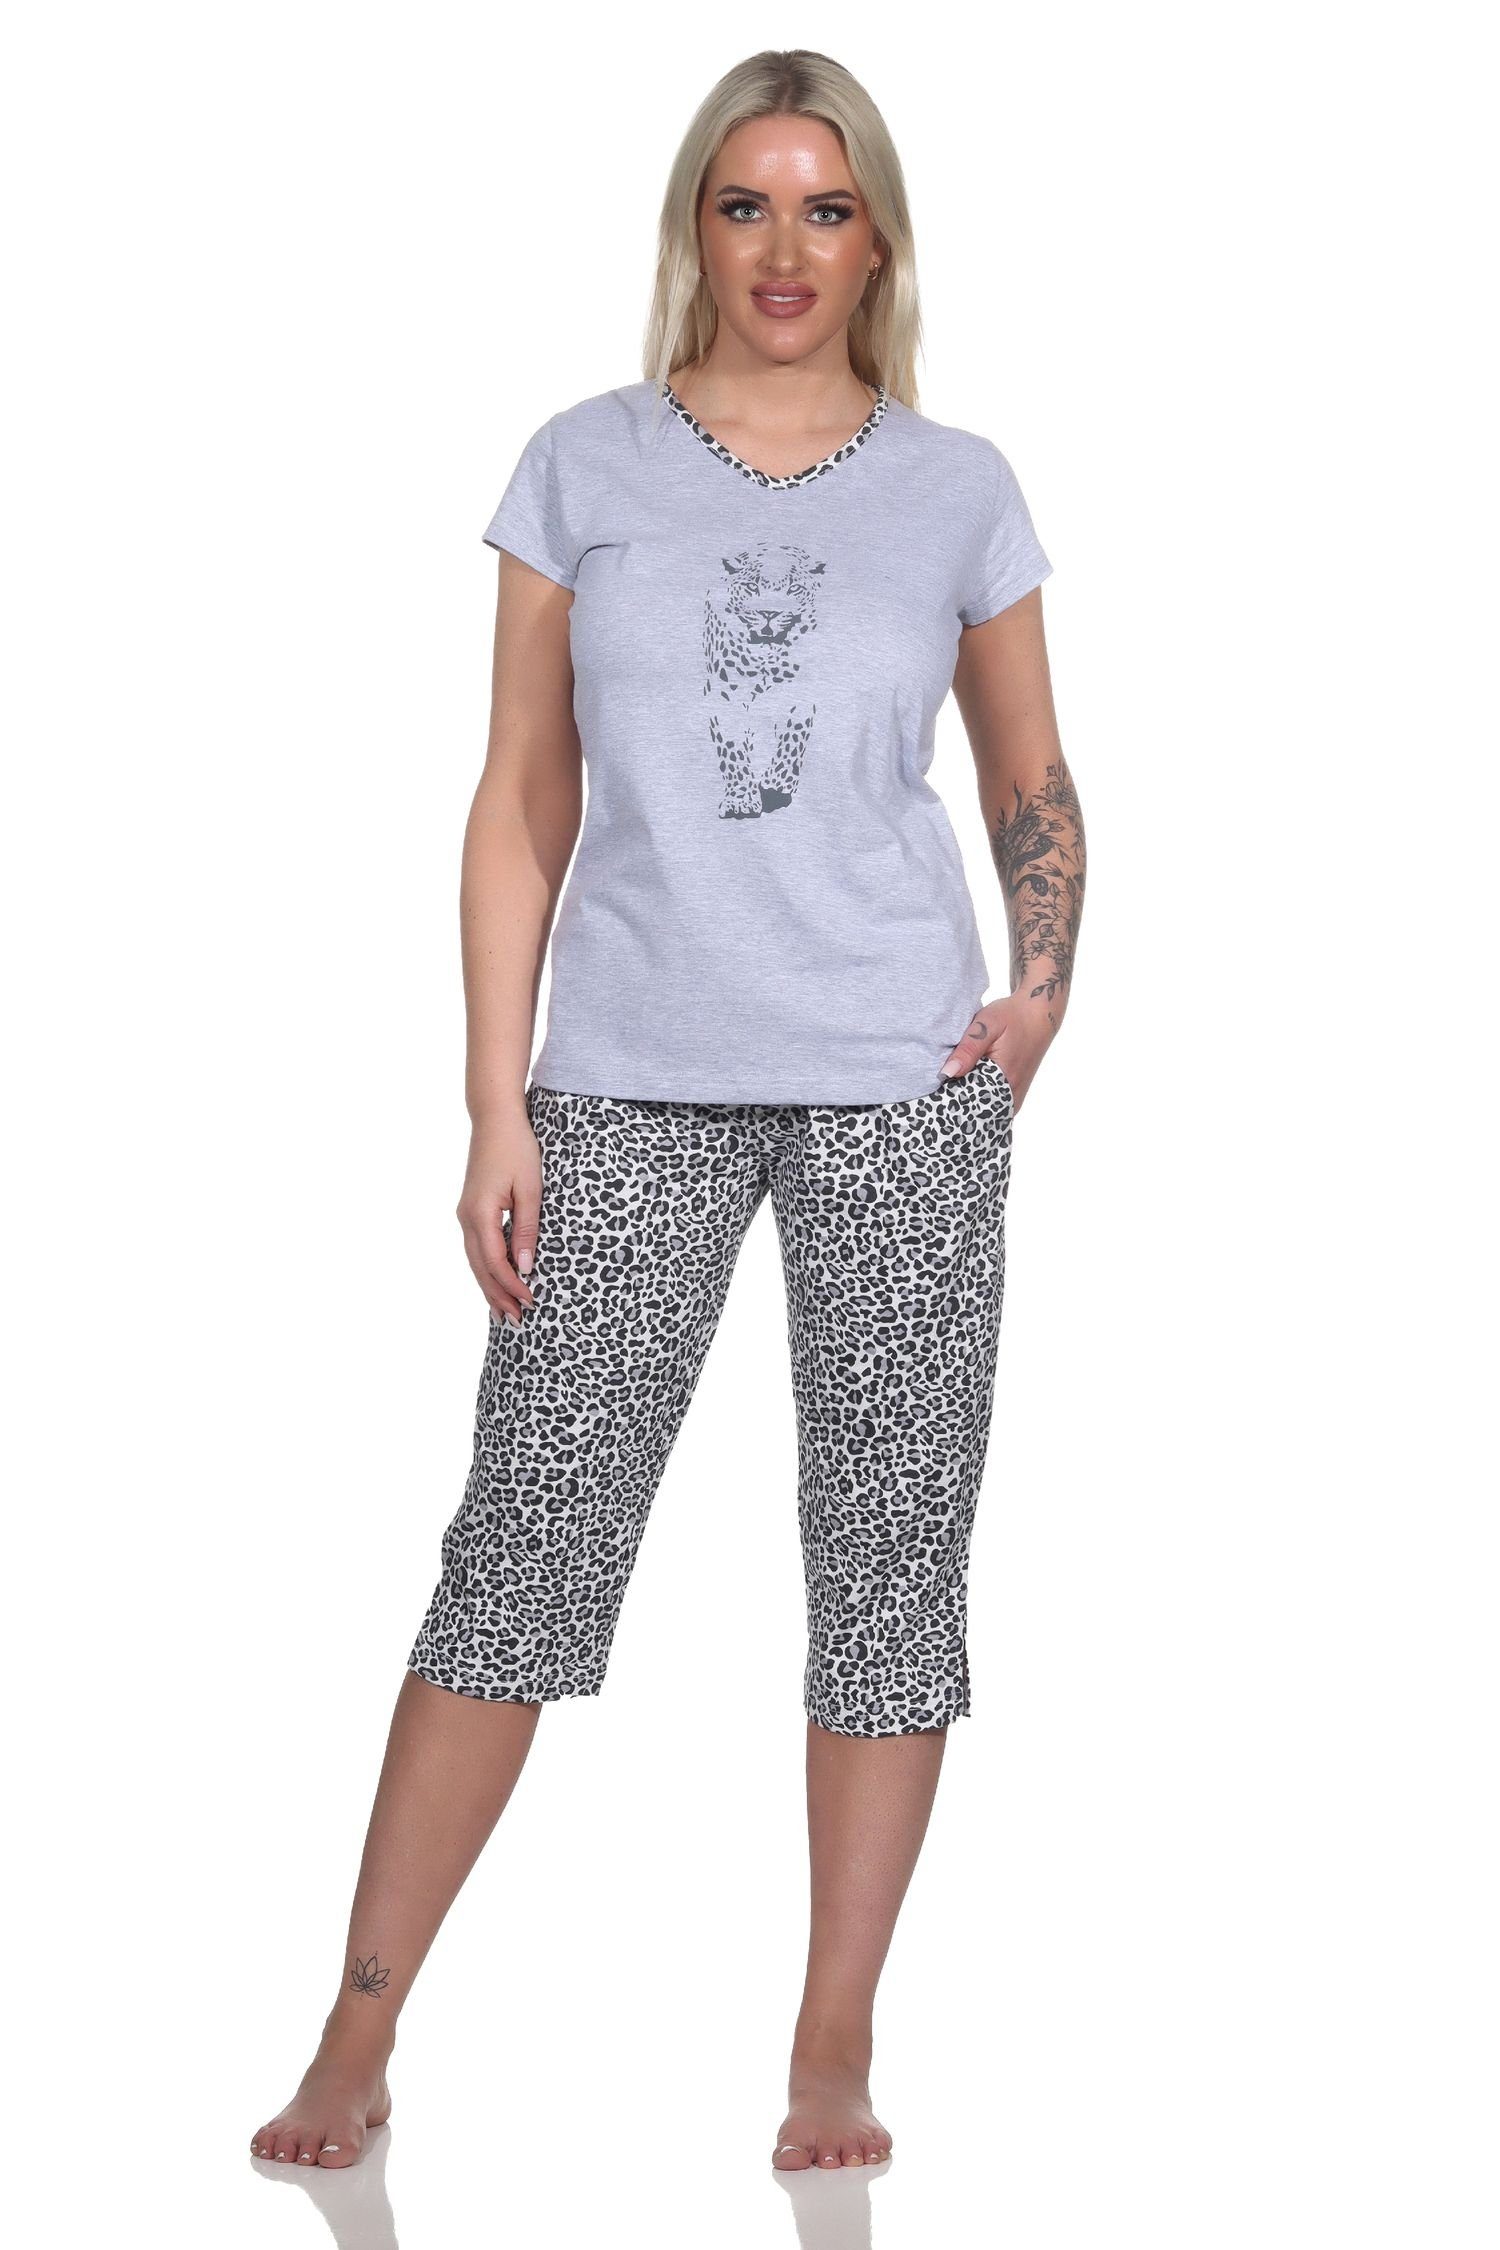 Pyjama Normann Schlafanzug grau-mel. mit Kurzarm Damen im Animal-Print-Look Capri Tiermotiv